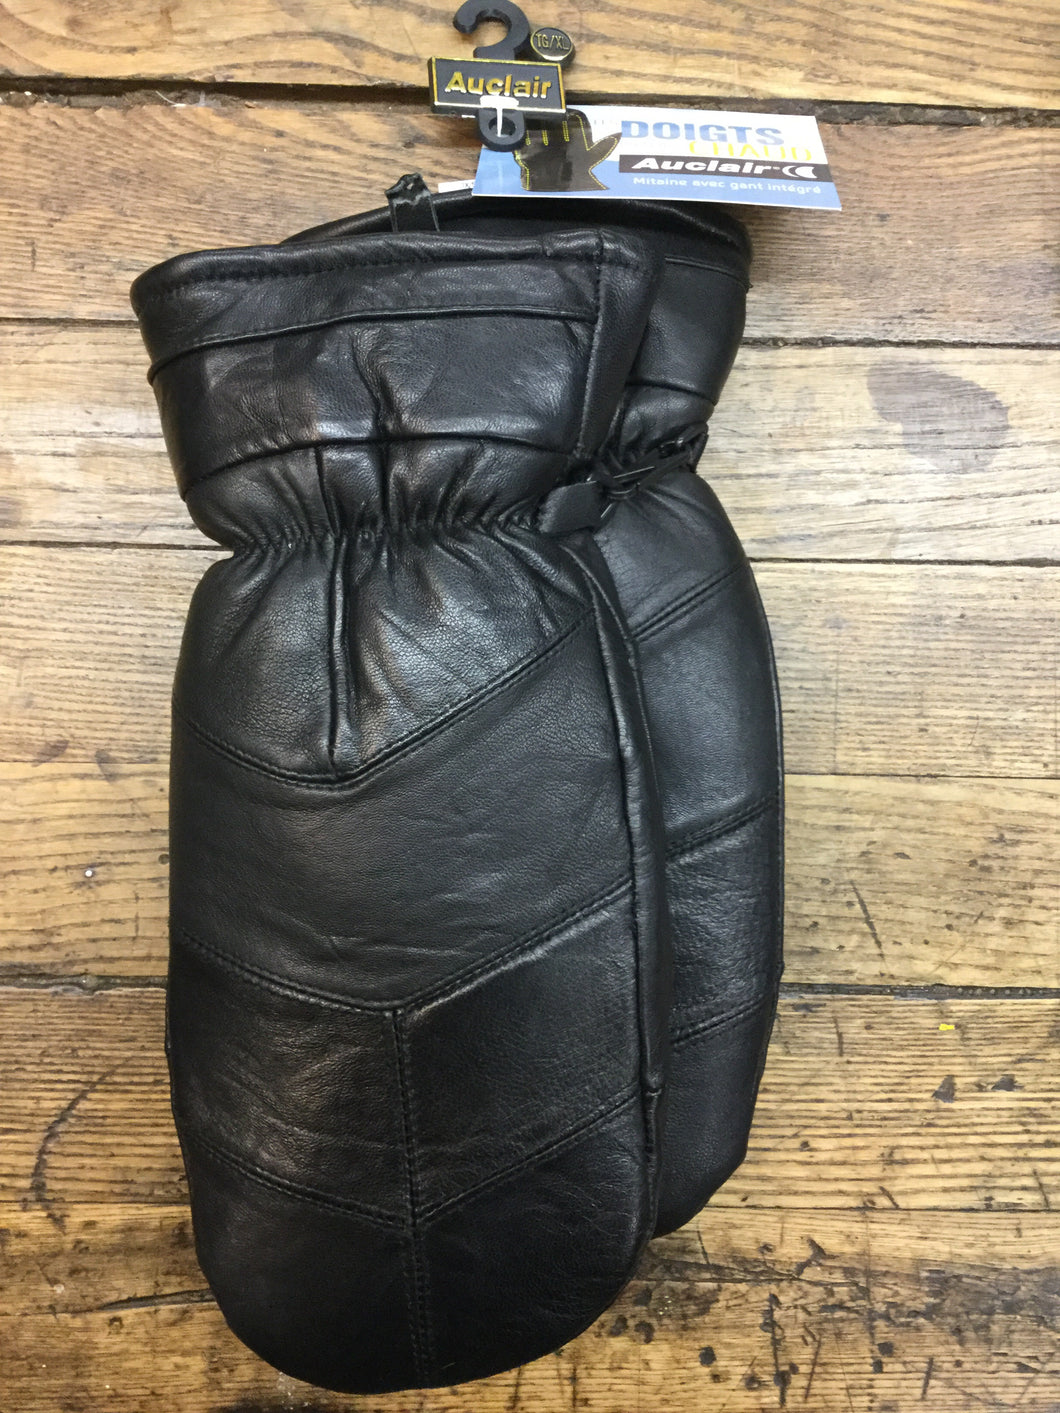 Cozy Leather Fingermitt by Auclair